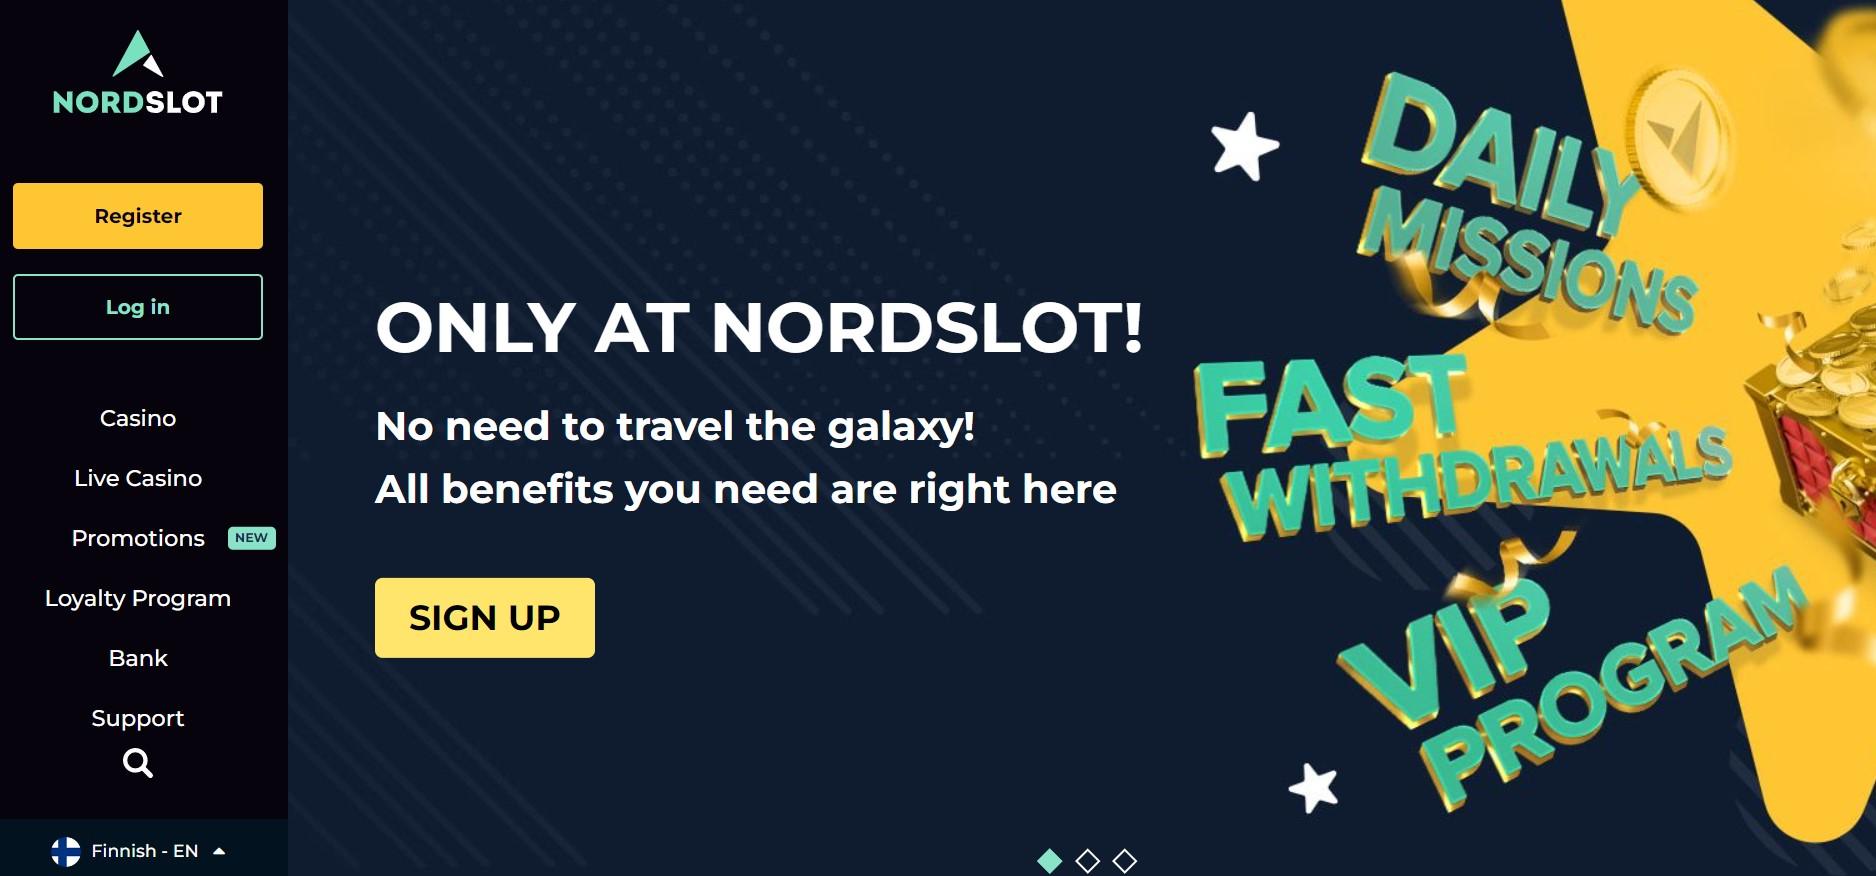 NordSlot logo